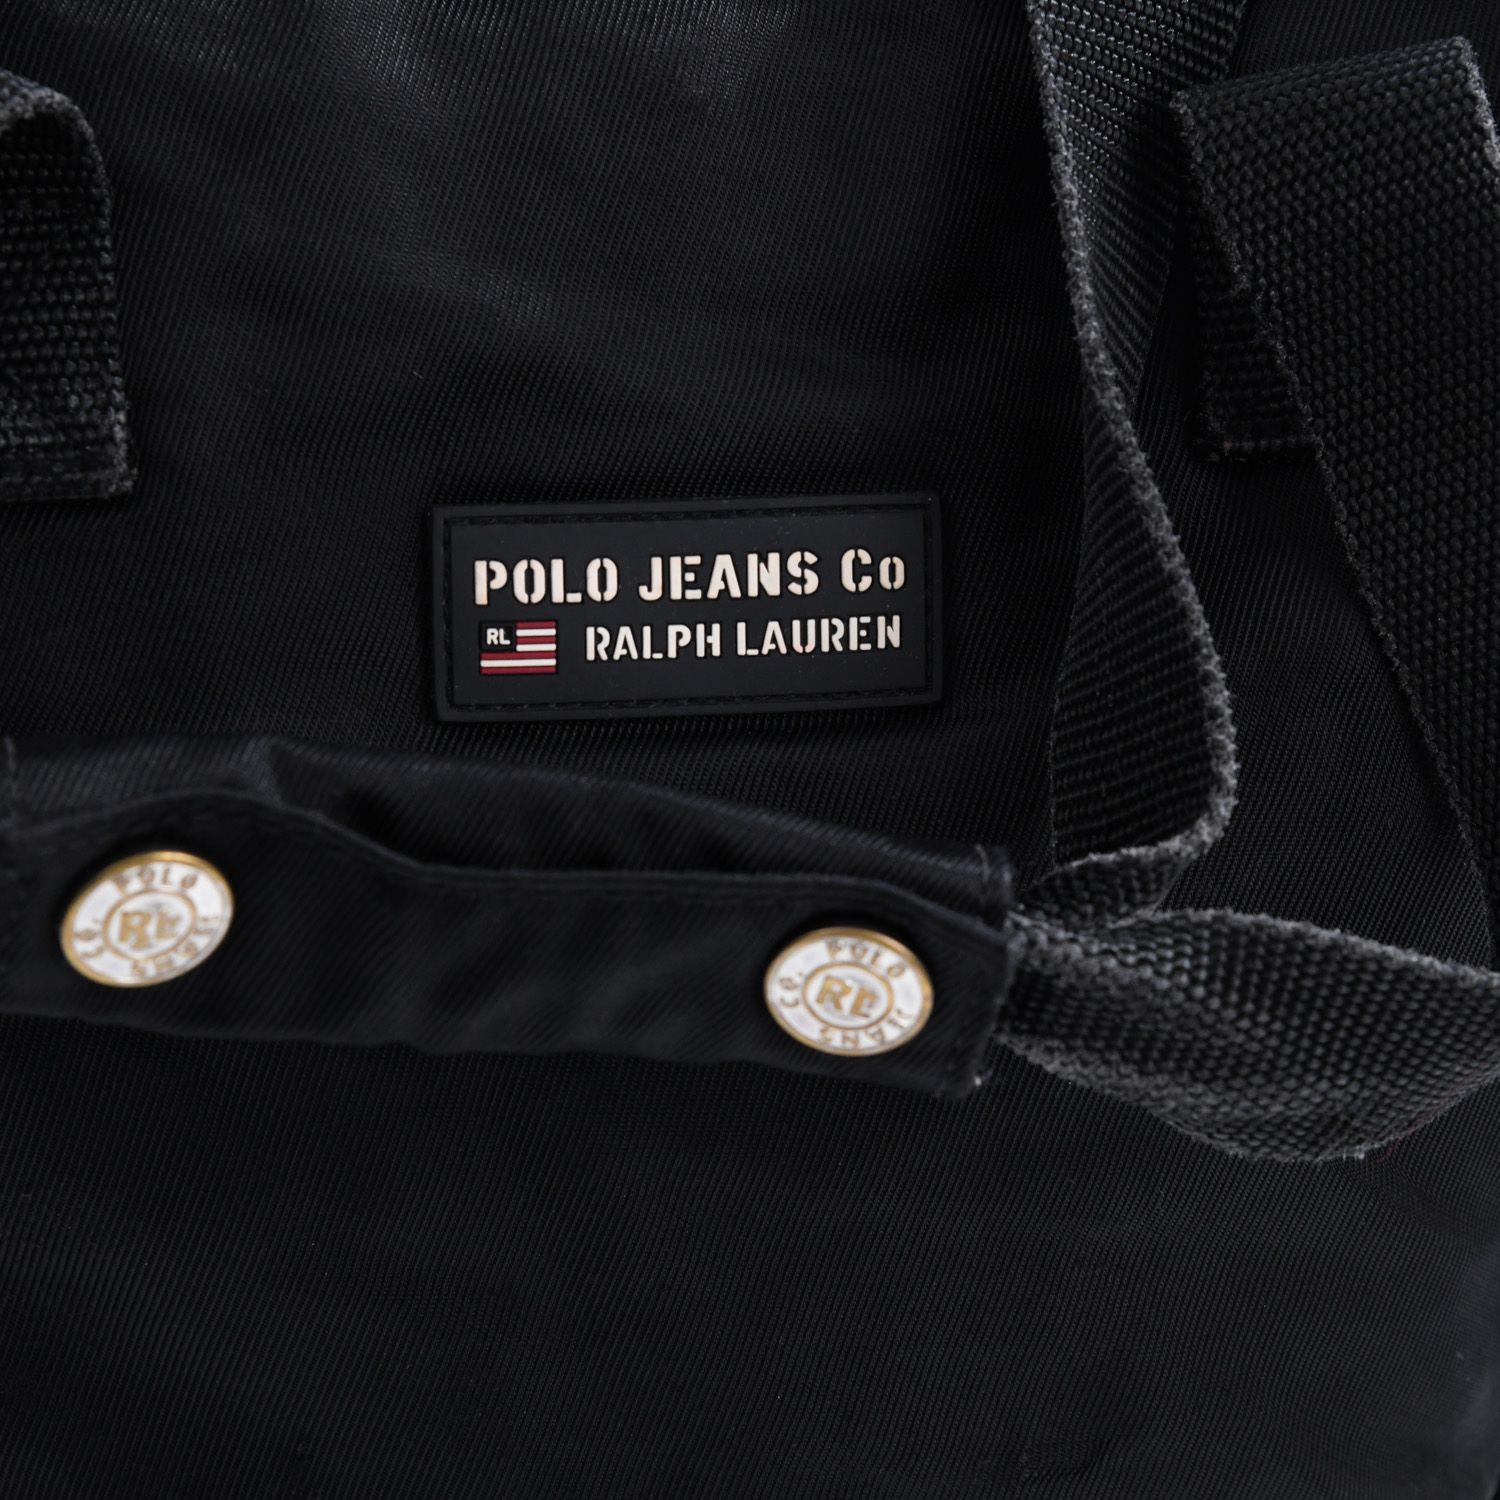 Ralph Lauren Polo Jeans Bag